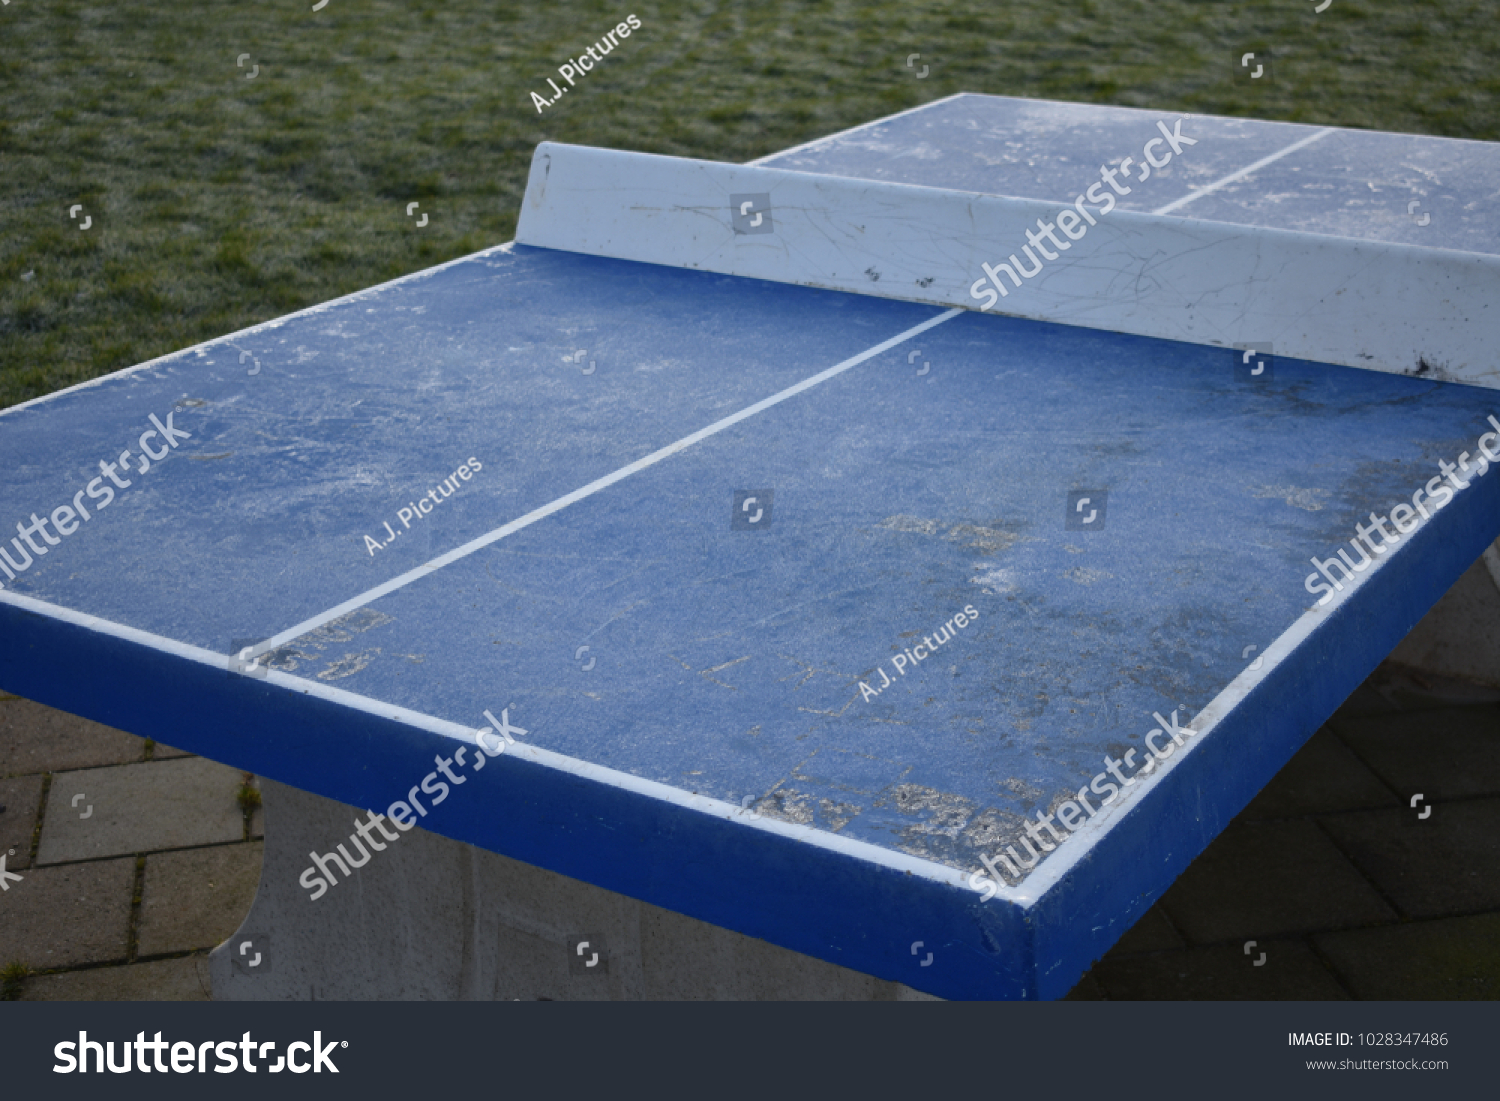 table tennis ground